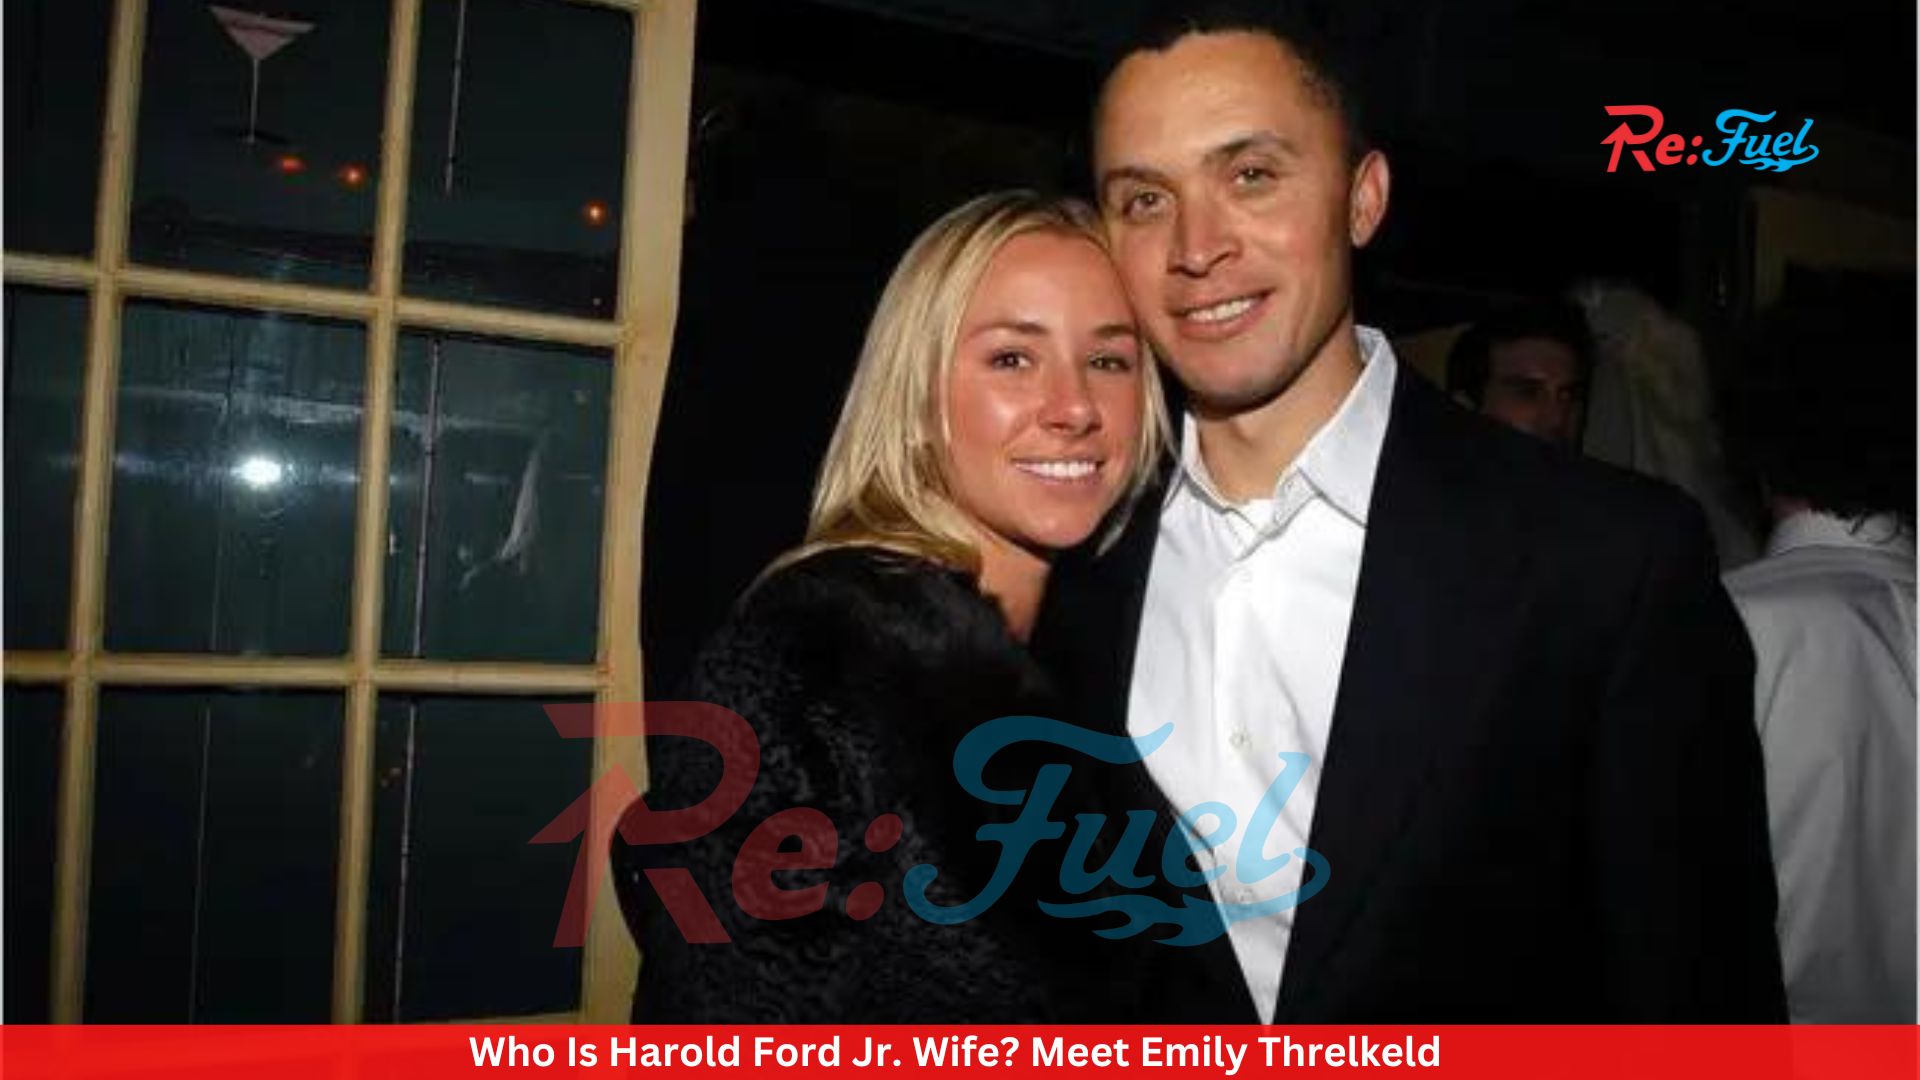 Who Is Harold Ford Jr. Wife? Meet Emily Threlkeld